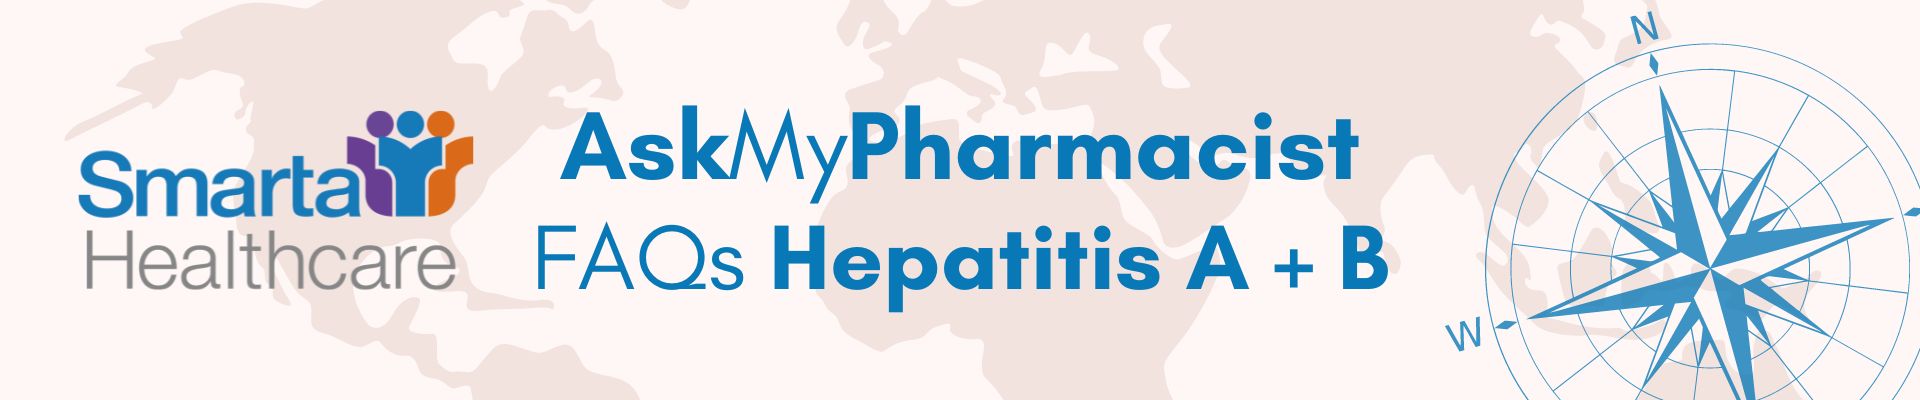 Smarta Healthcare AskMyPharmacist FAQs Hepatitis A + B vaccine